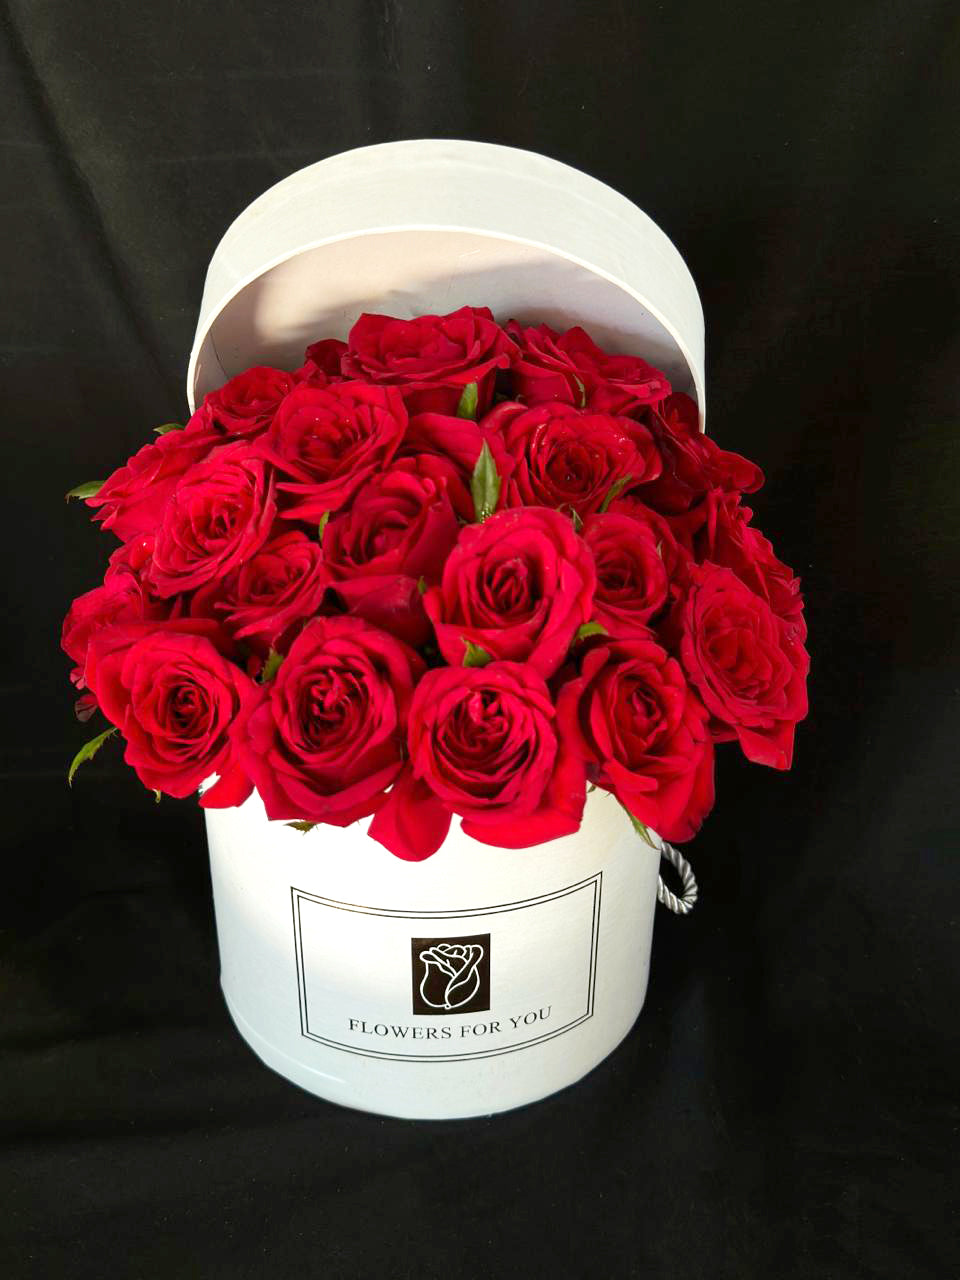 Red-25-roses-white-box-L-for-Valentine-DodoMarket-delivery-Mauritius